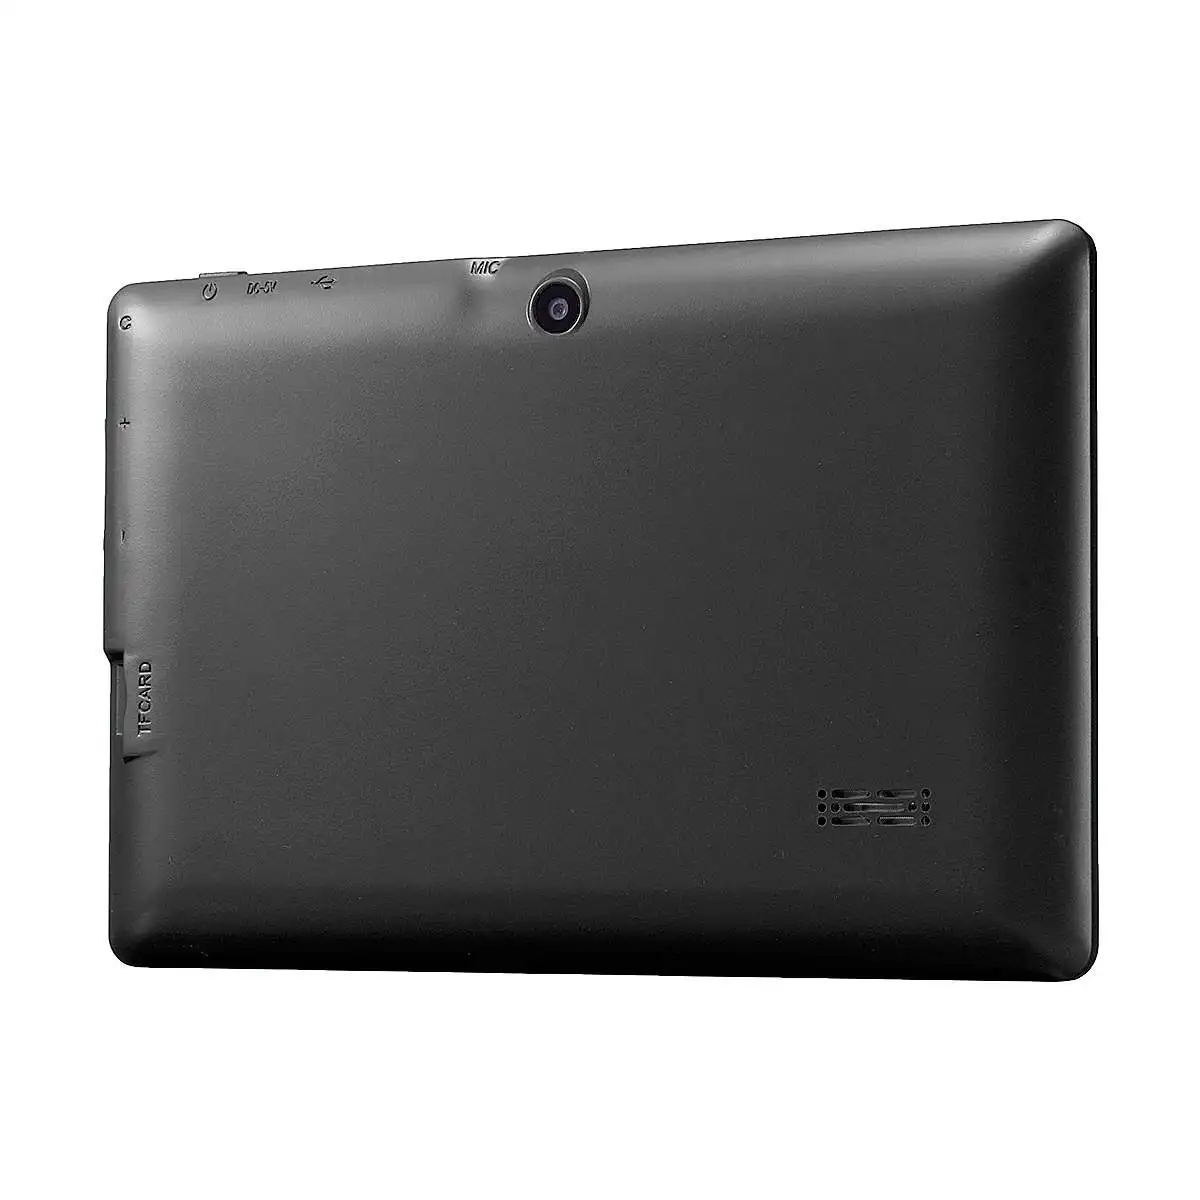 7 дюймов 4 ядра компьютер 8 ГБ 512 М Tablet PC, четыре ядра, Android Системы 4.4.2 HD интеллигентая(ый) с европейской вилкой MP4 планшет Wi-Fi